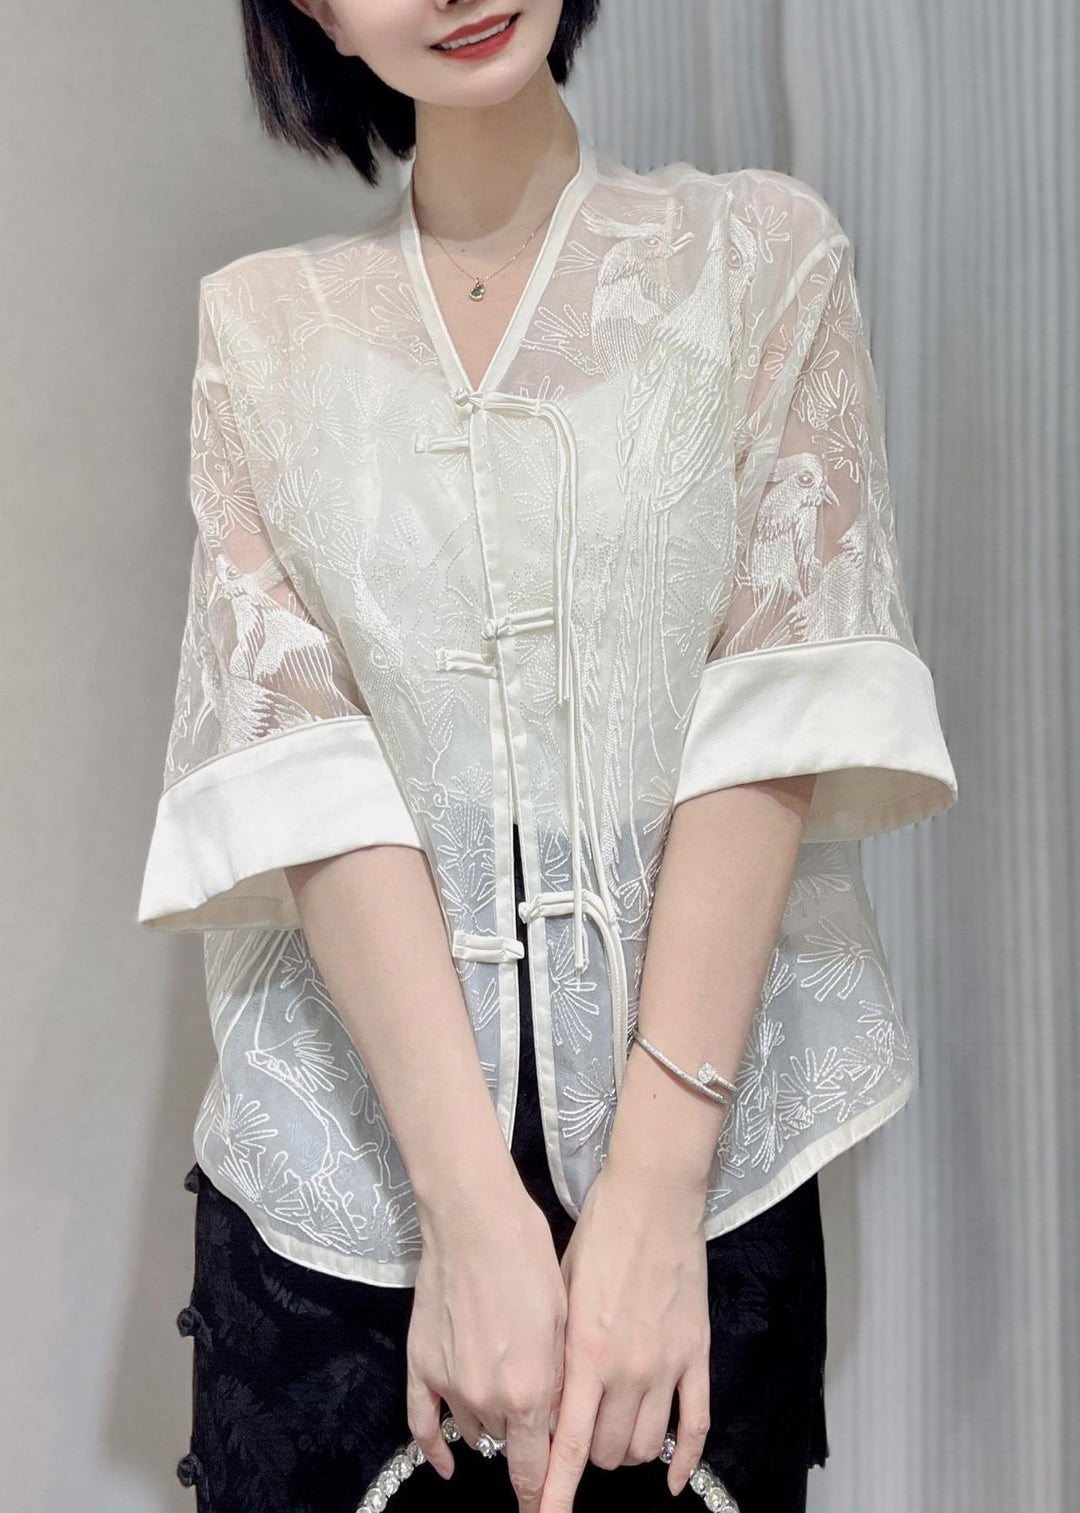 Women White Embroidered Button Silk Blouse Summer